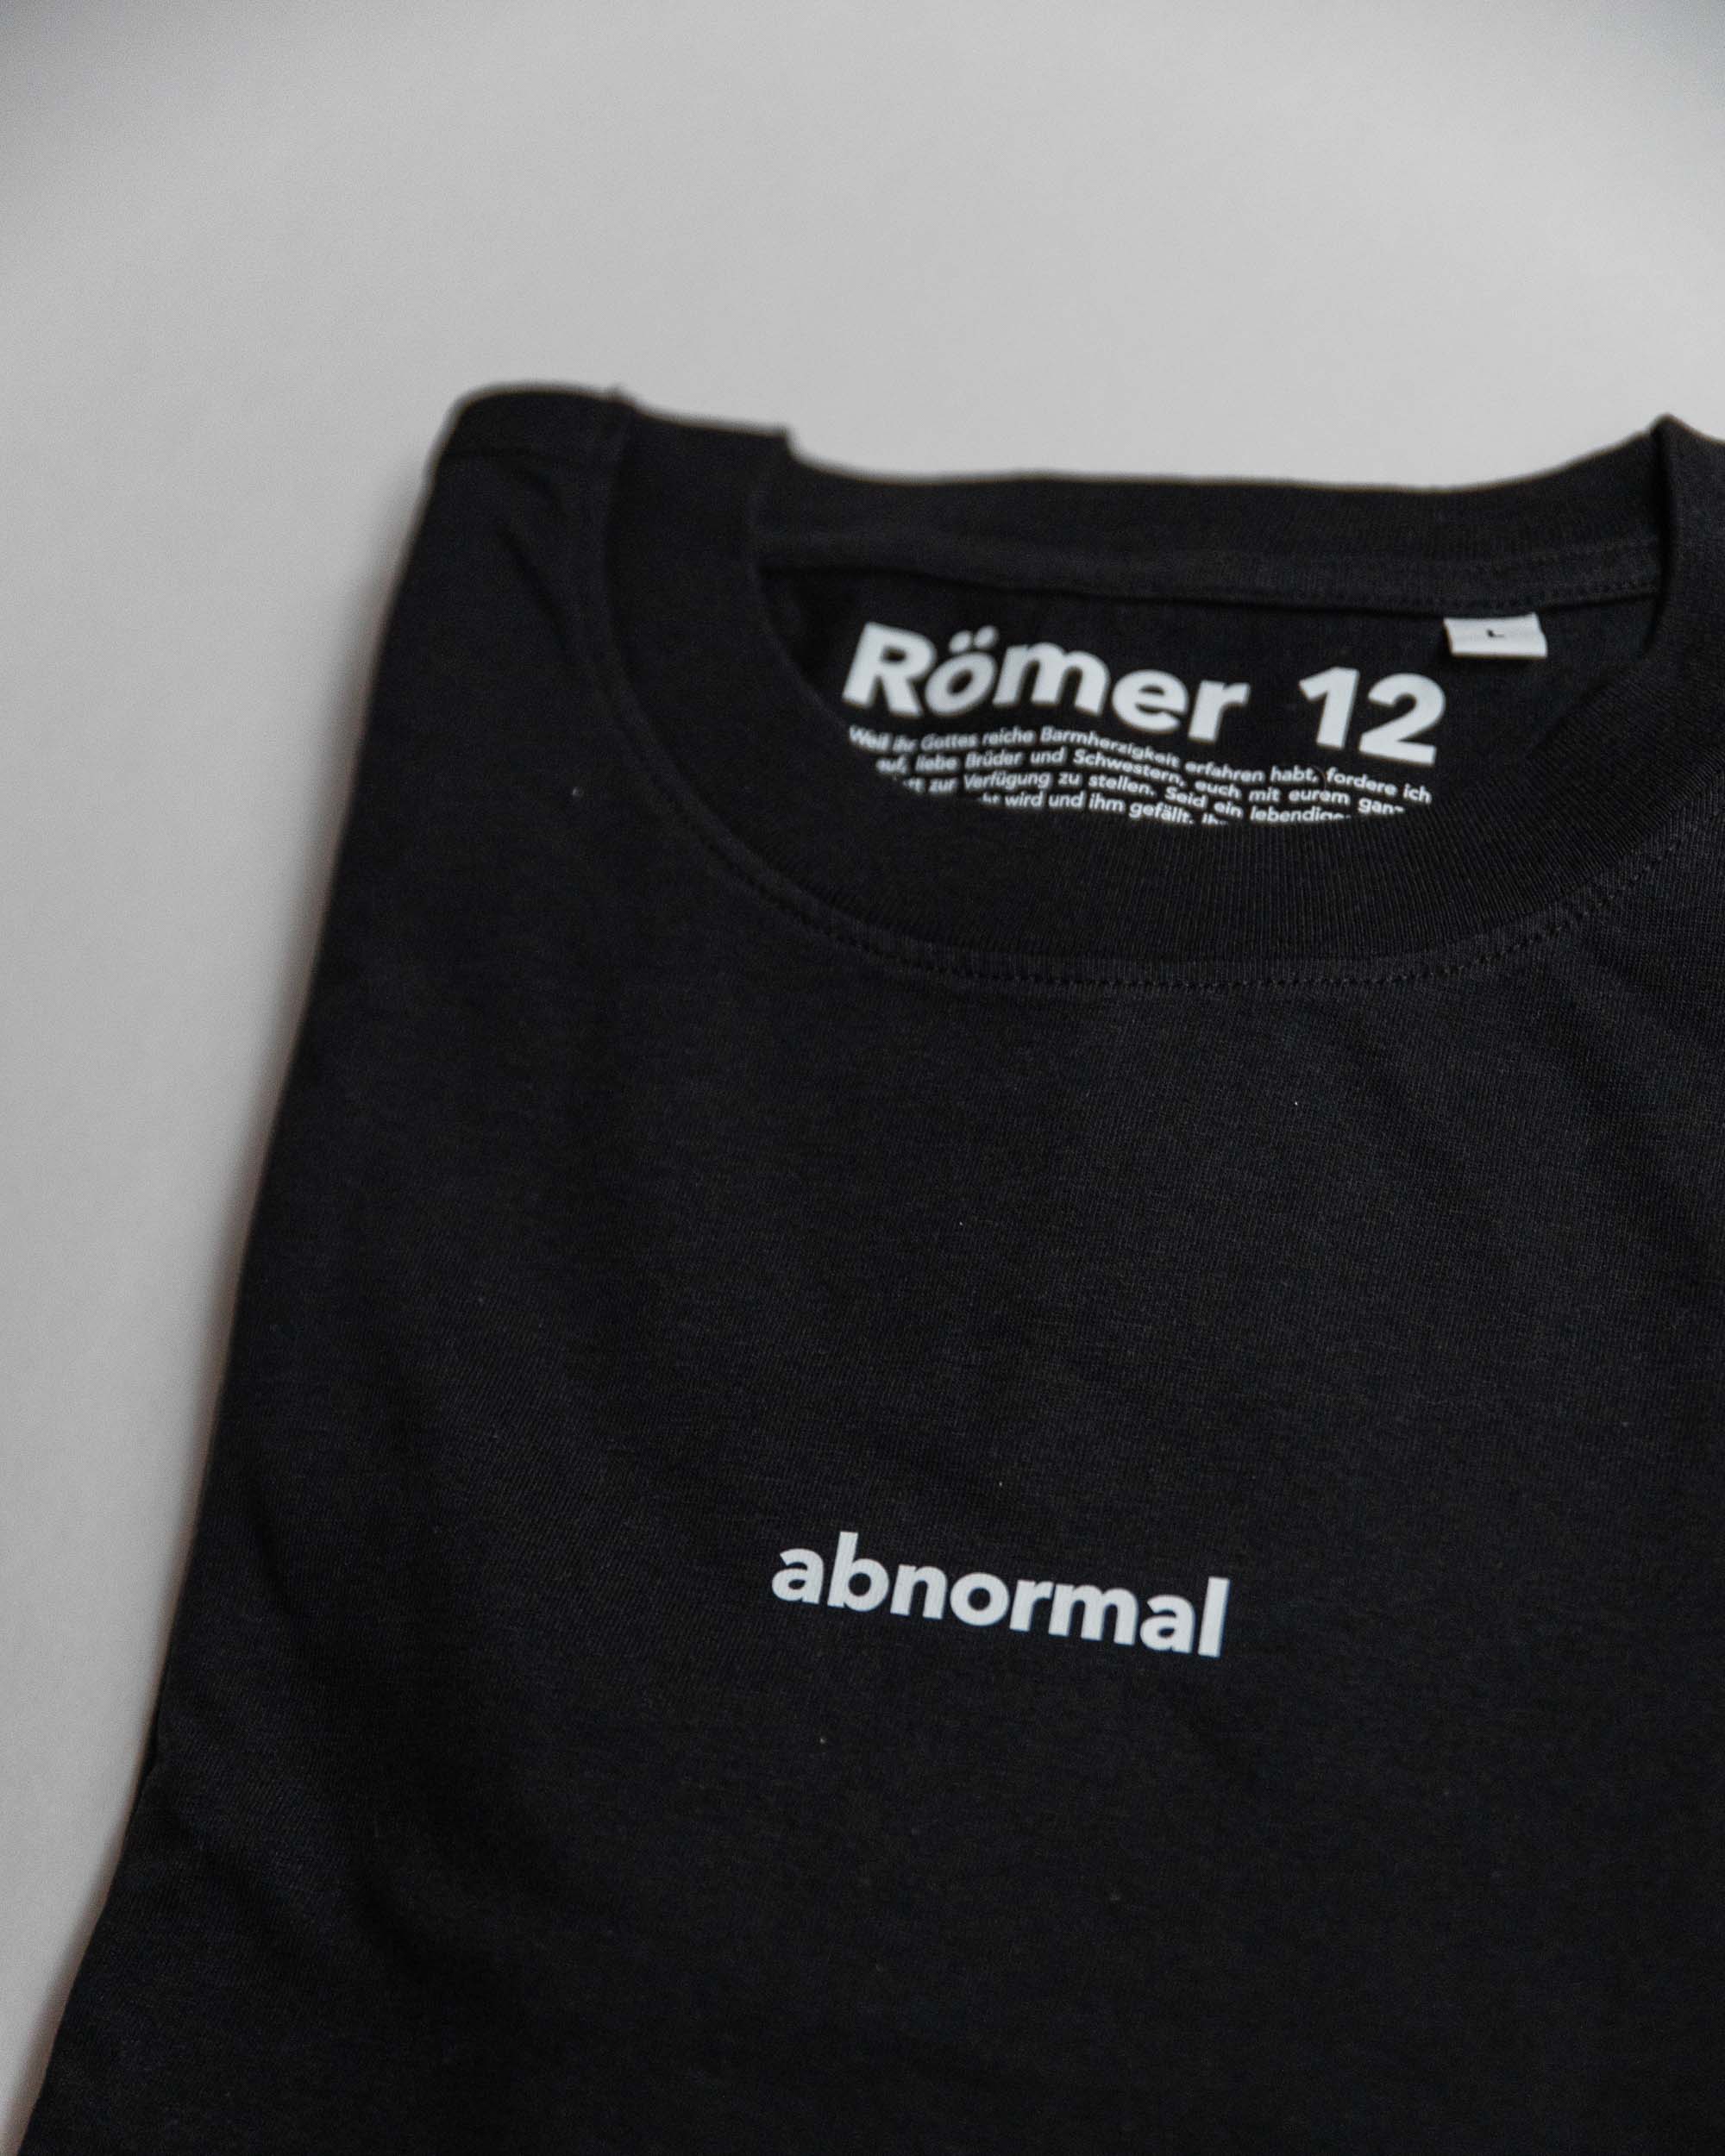 abnormal / tshirt / römer 12